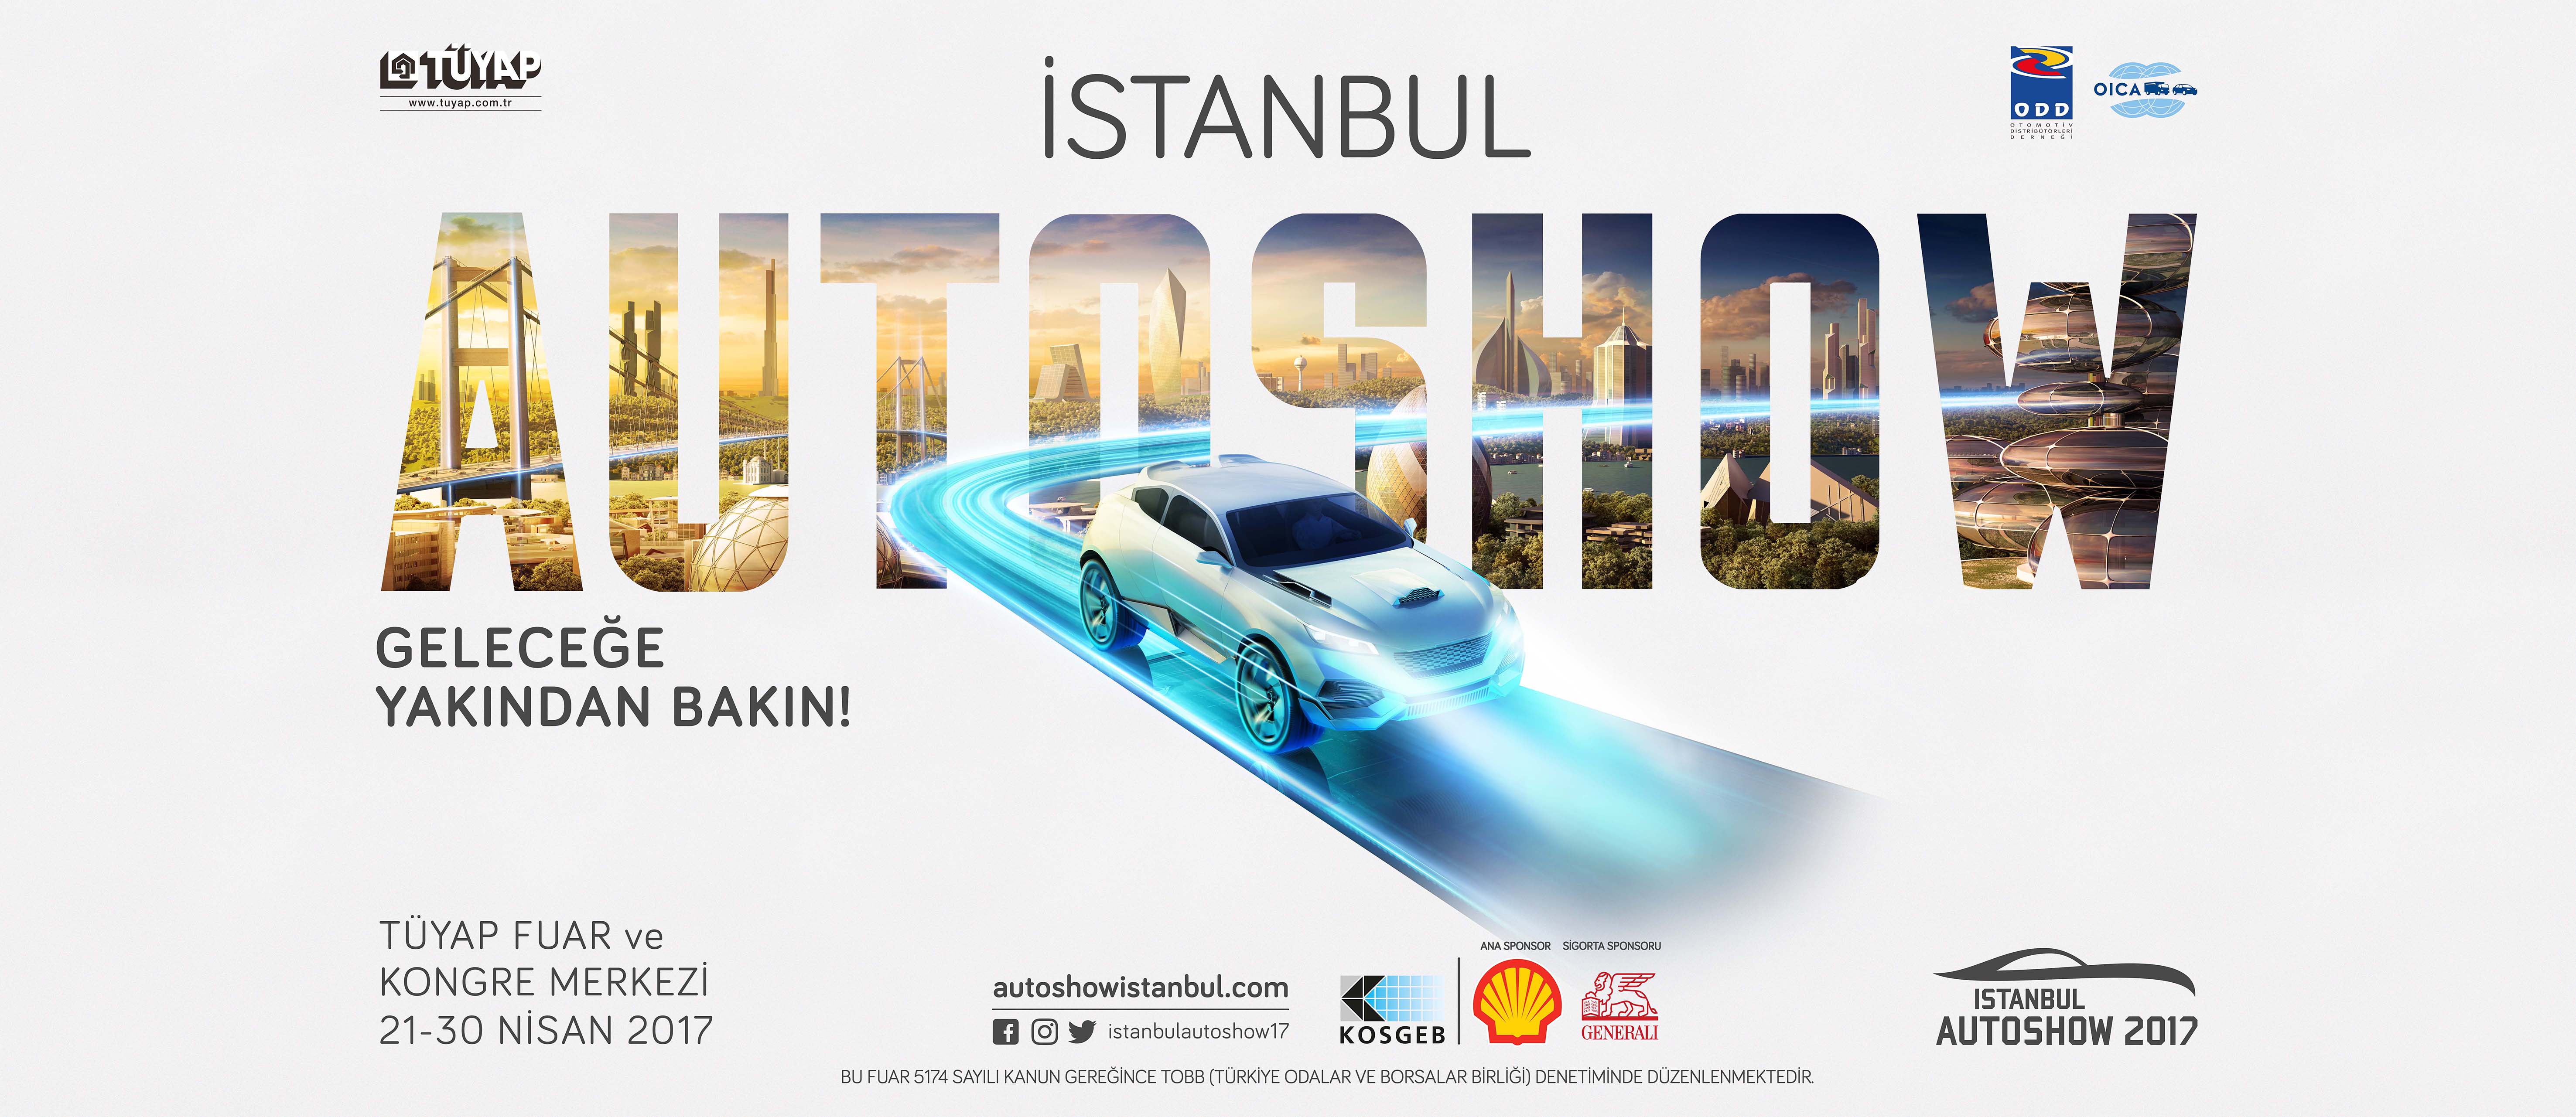 İstanbul Auto Show'da son söz söylendi!